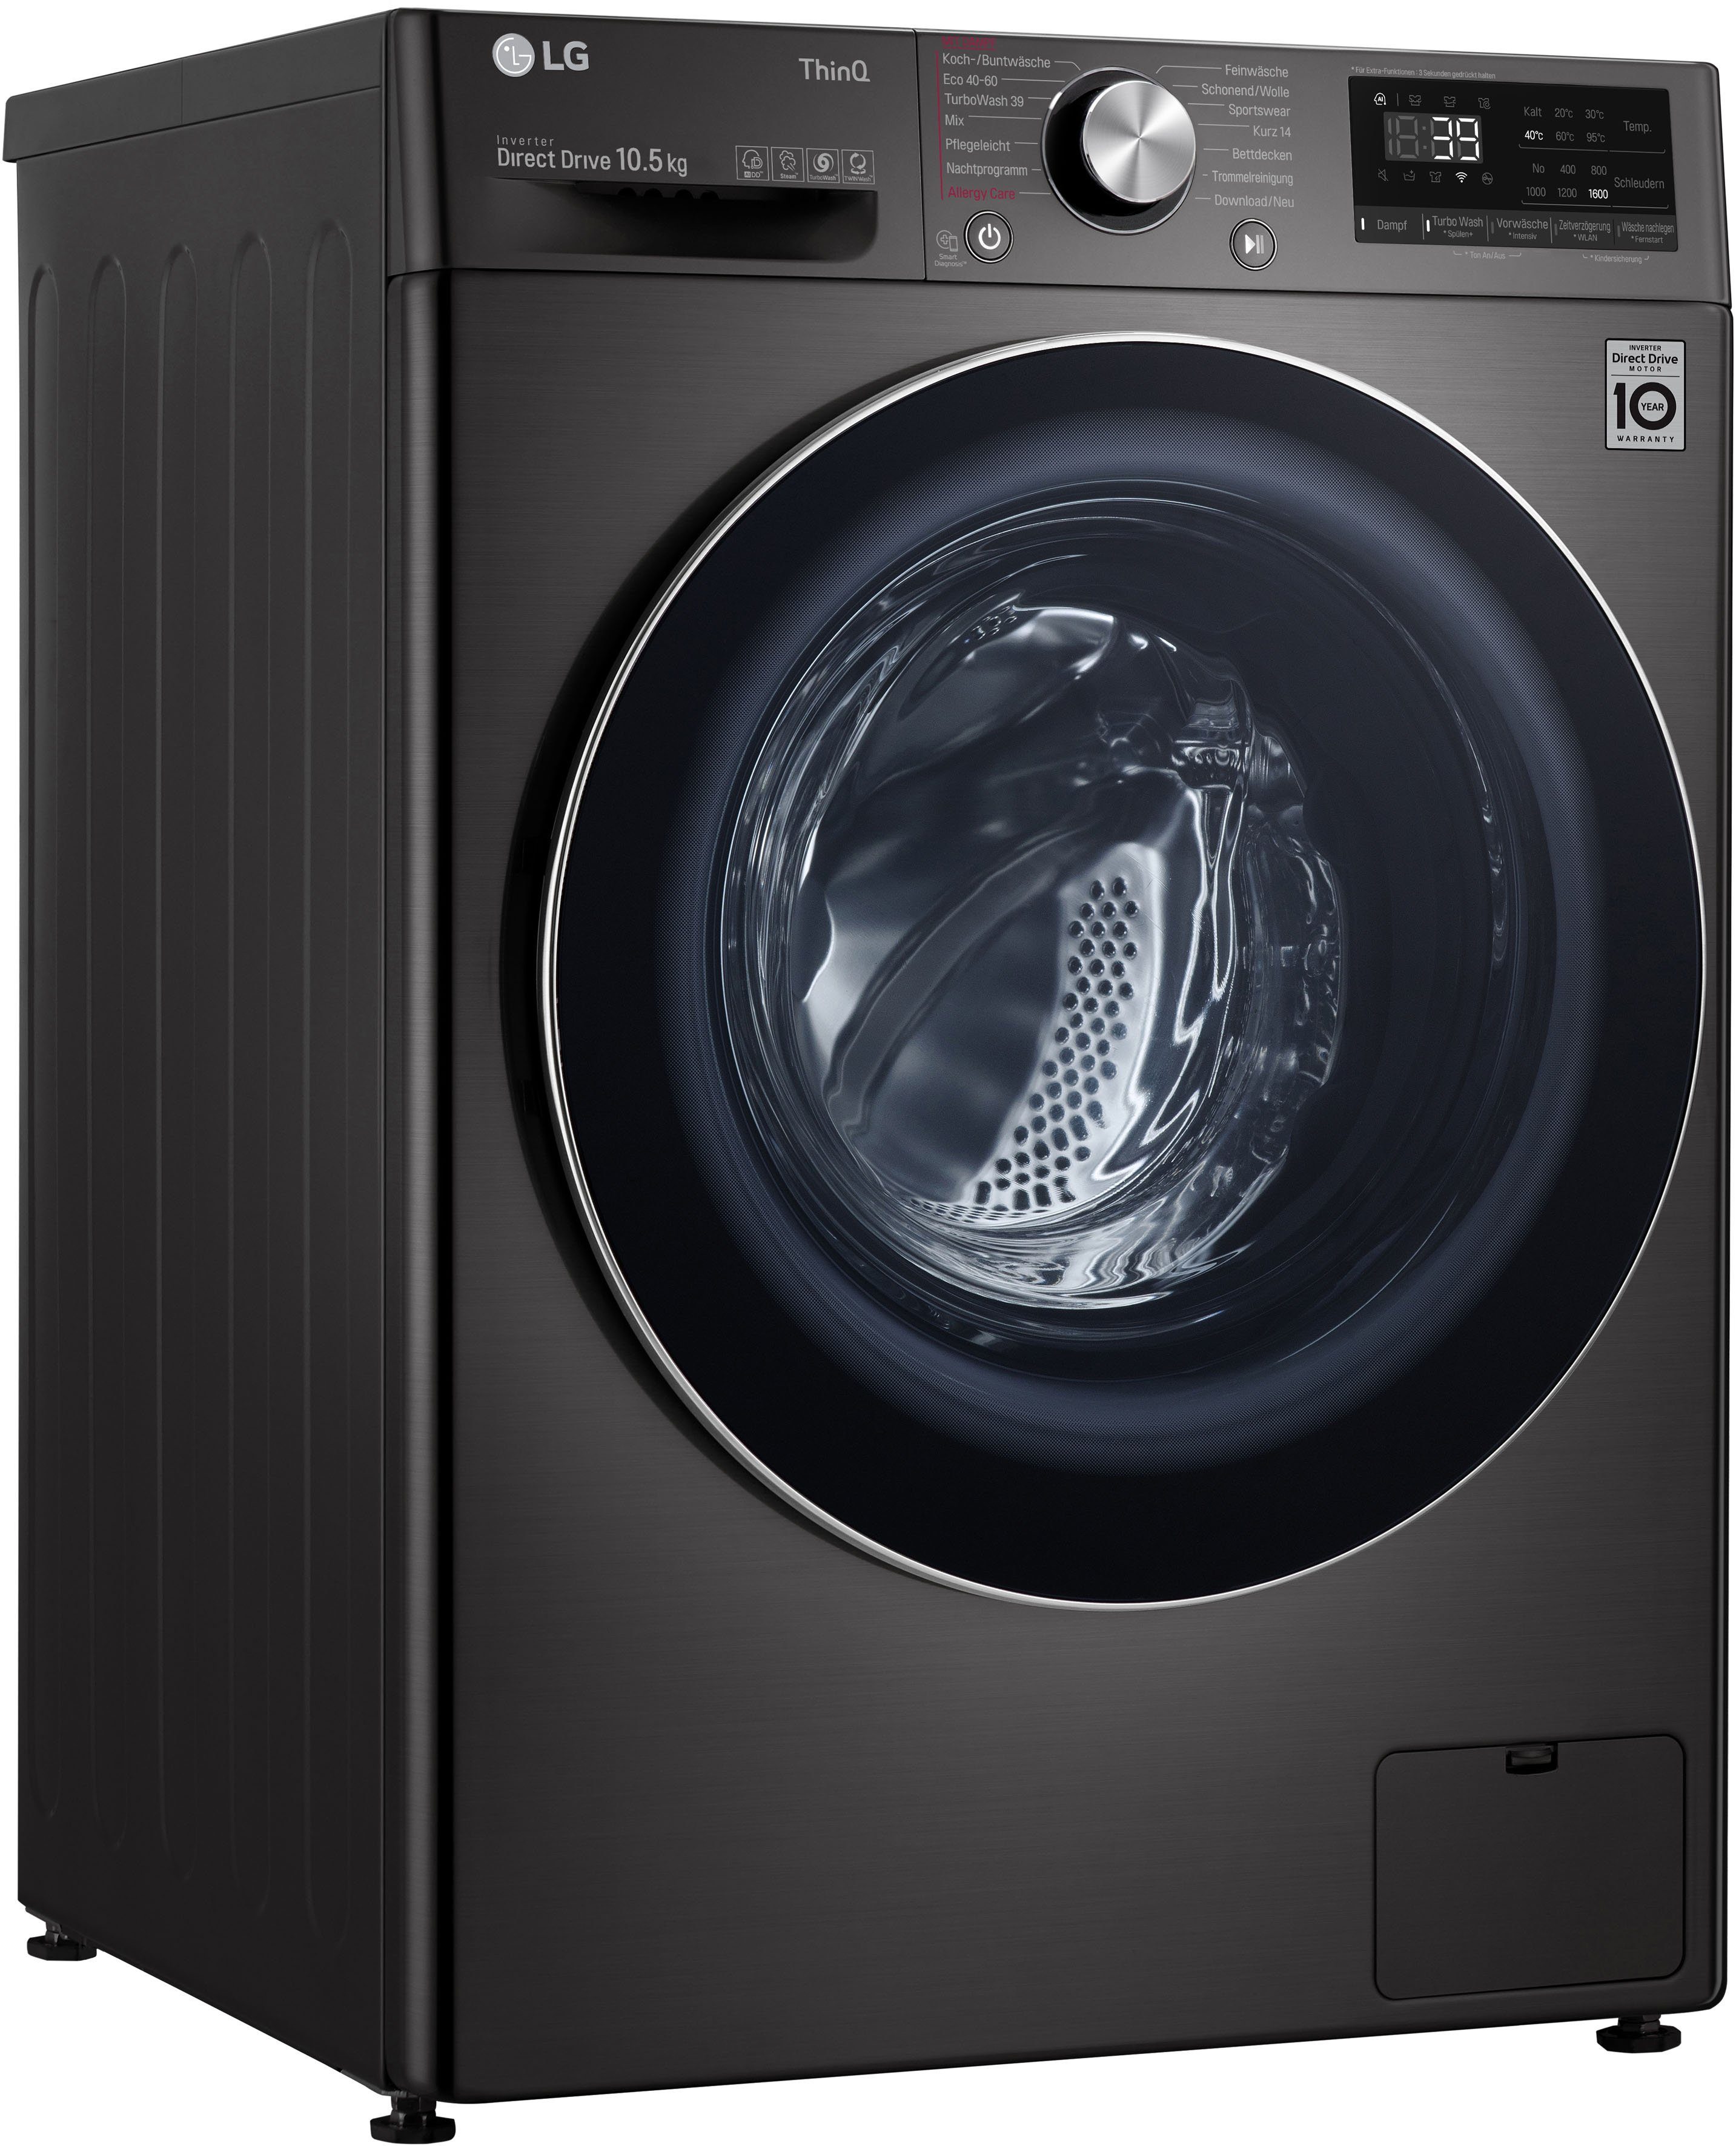 LG Waschmaschine F6WV710P2S, 10,5 kg, 1600 U/min | OTTO